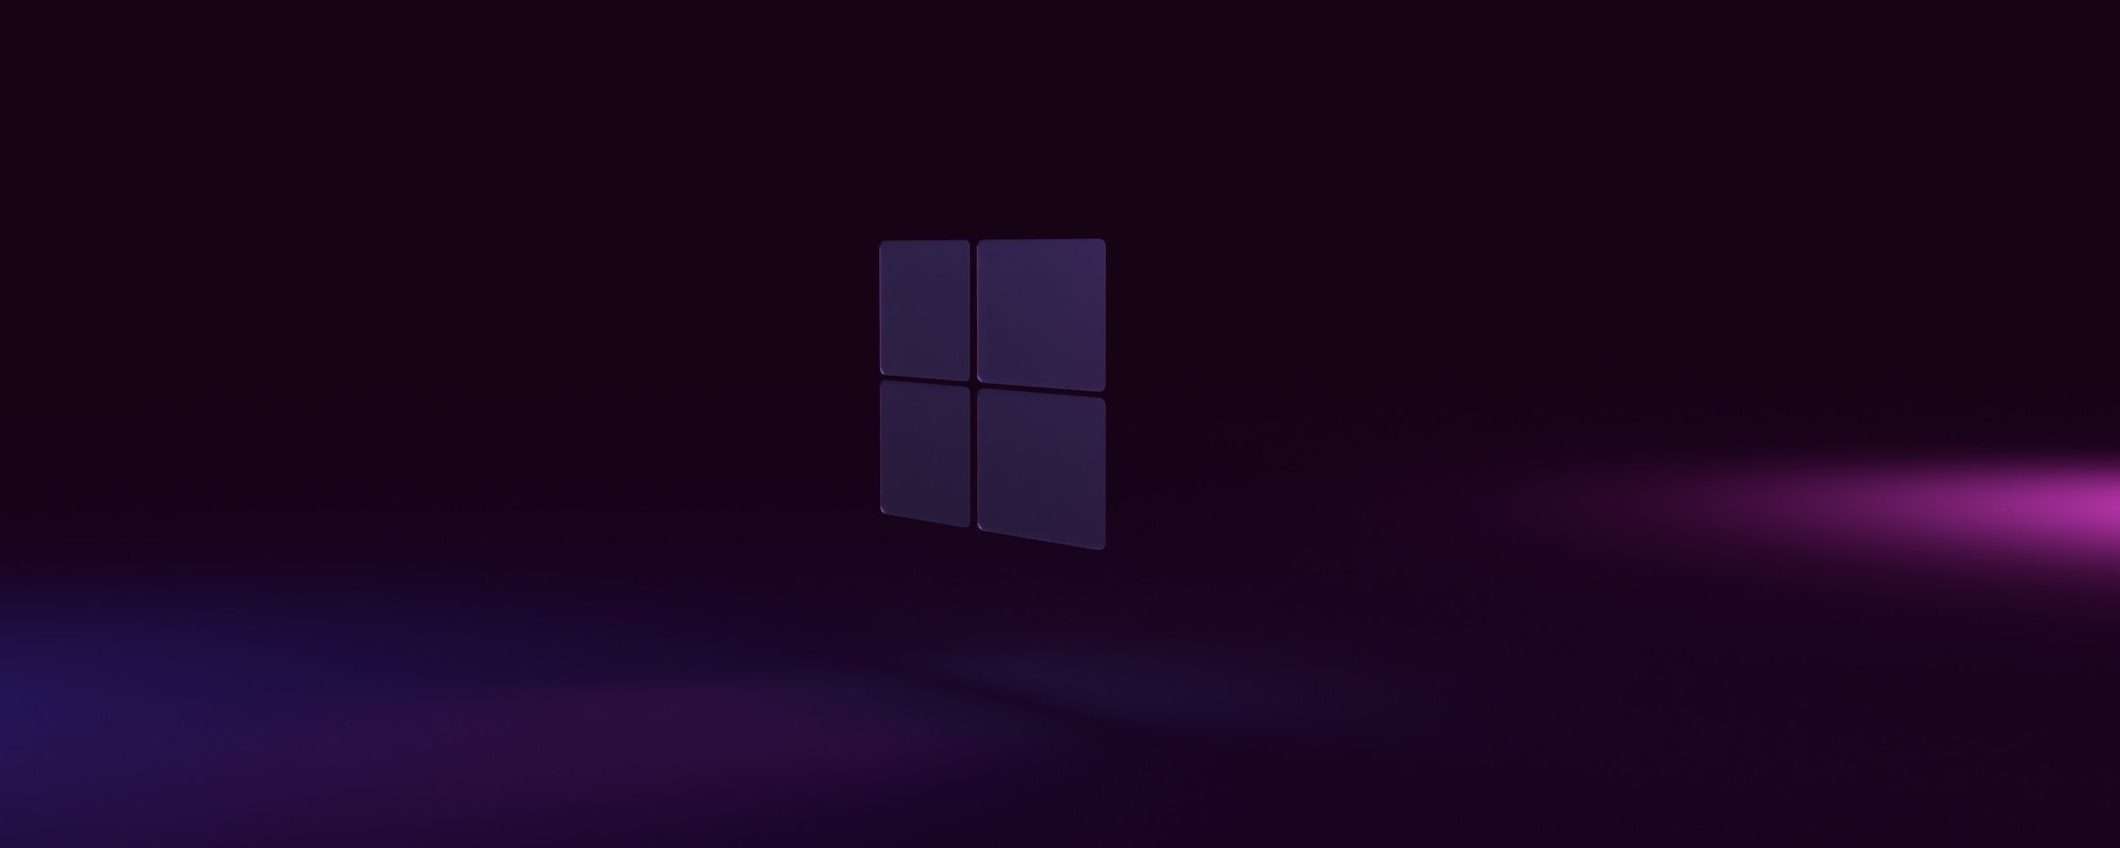 Windows 11: Microsoft vuole dire addio a MSDT